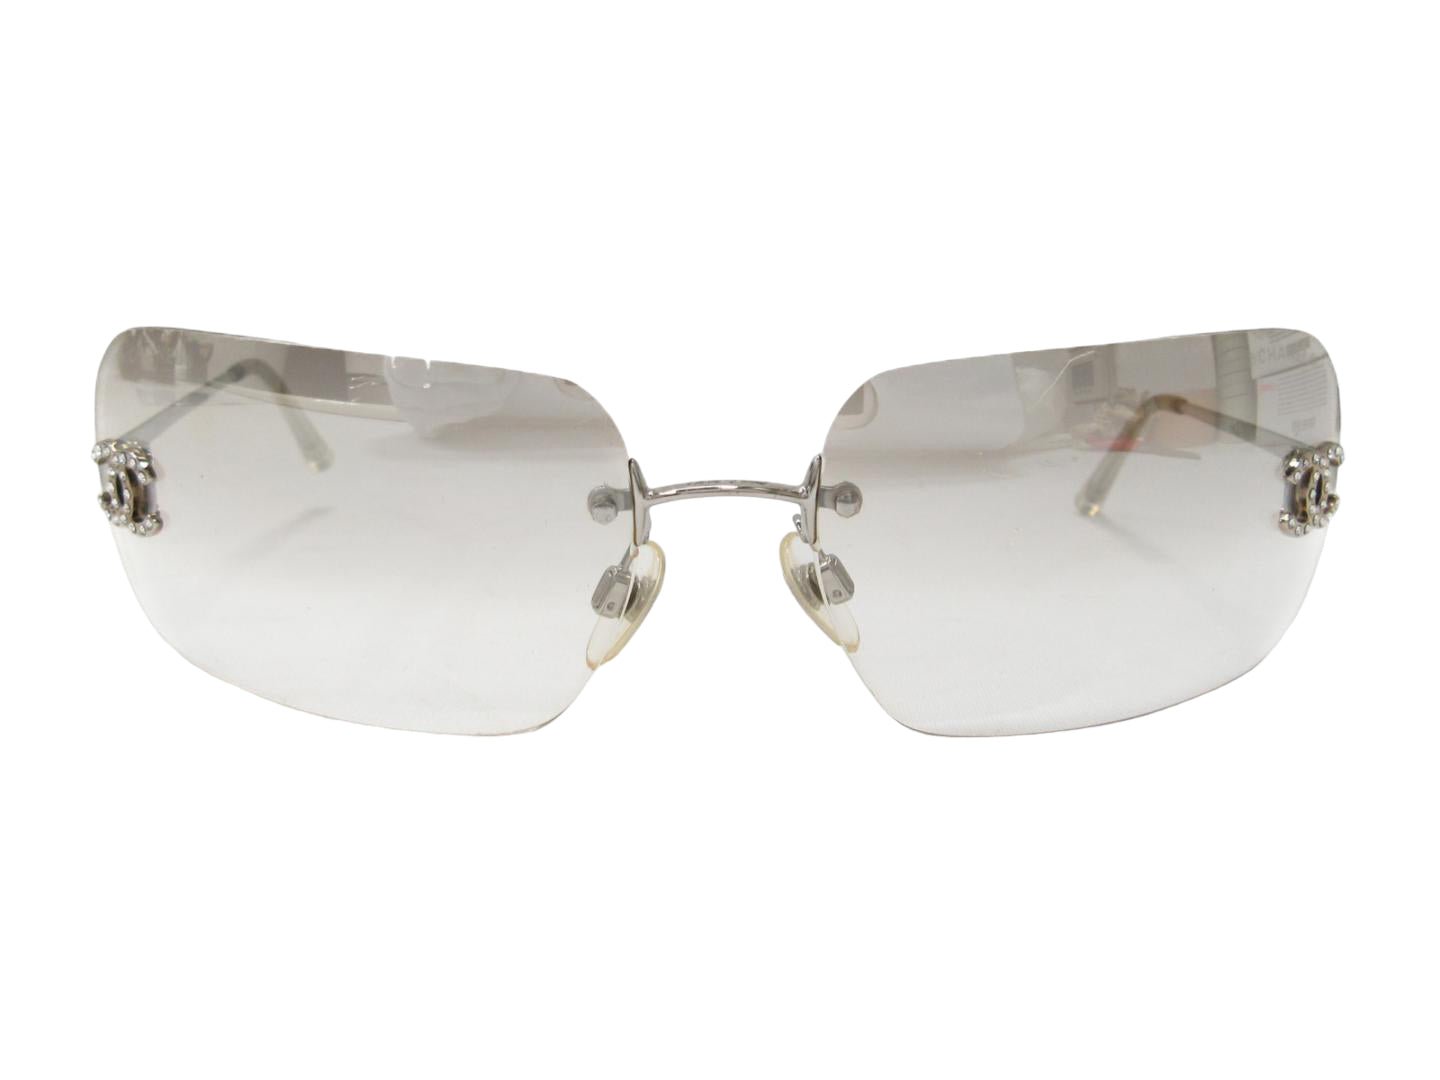 Discover 165+ chanel vintage rhinestone sunglasses